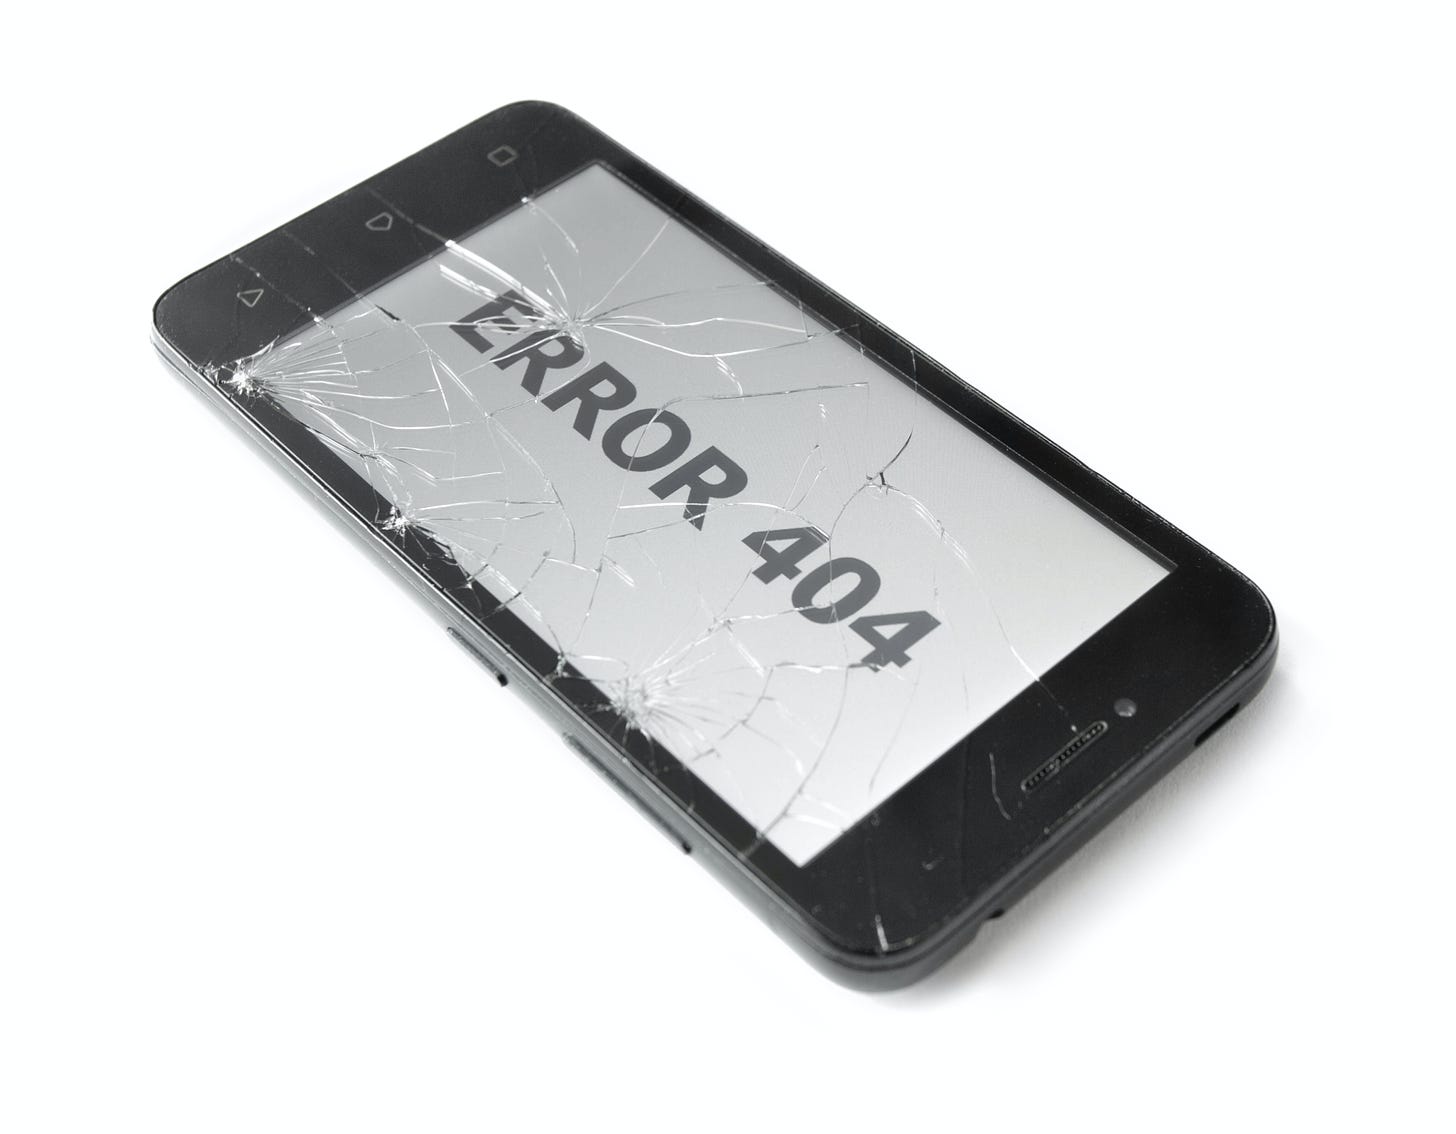 phone with broken screen that says error 404